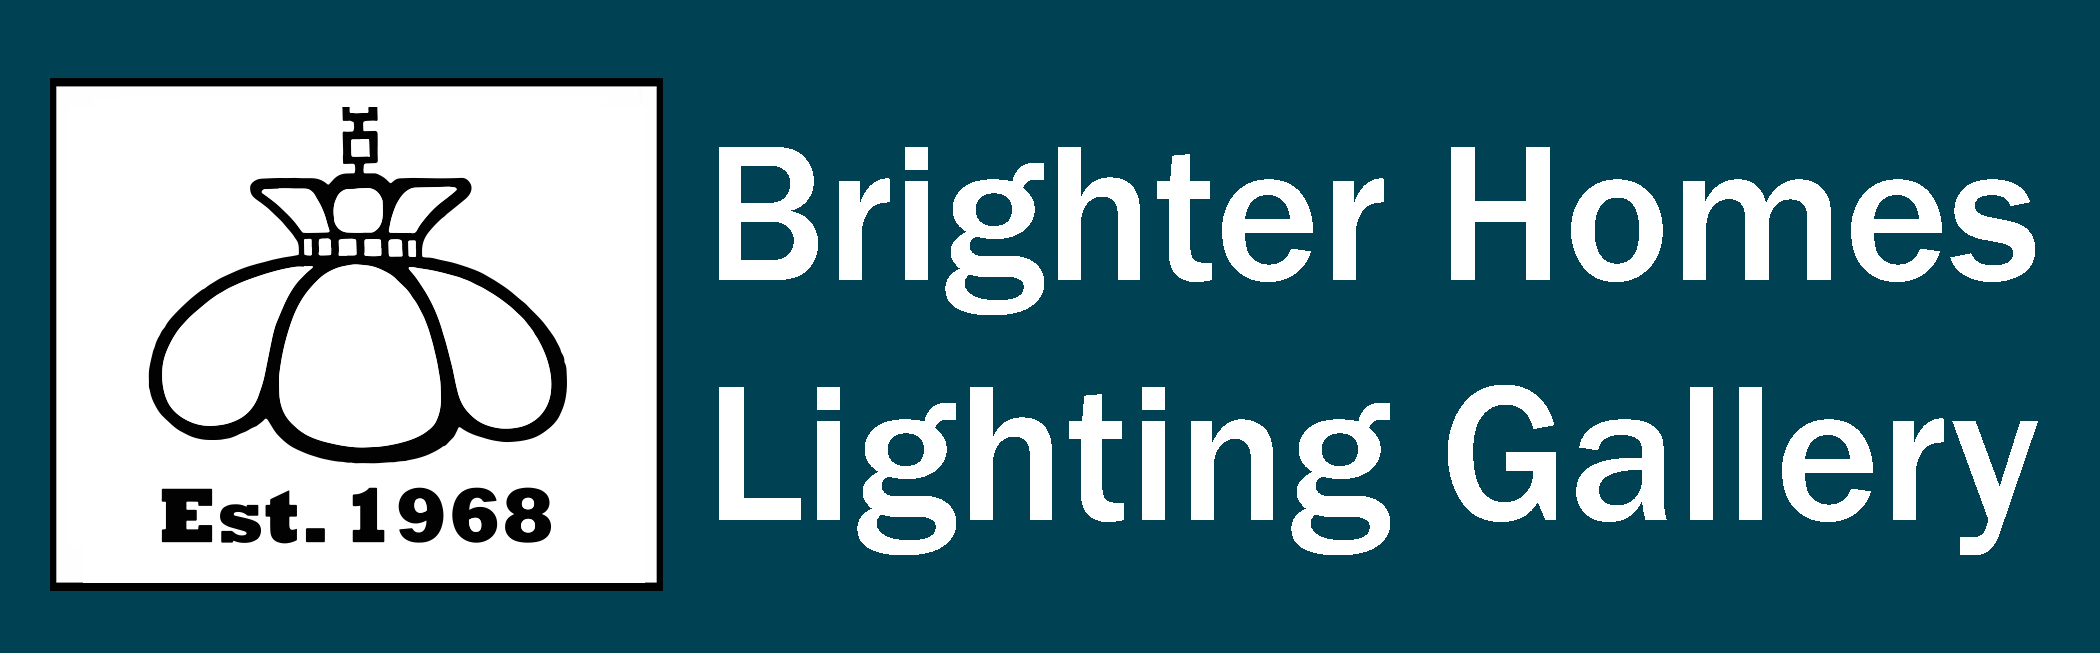 Brighter Homes Lighting